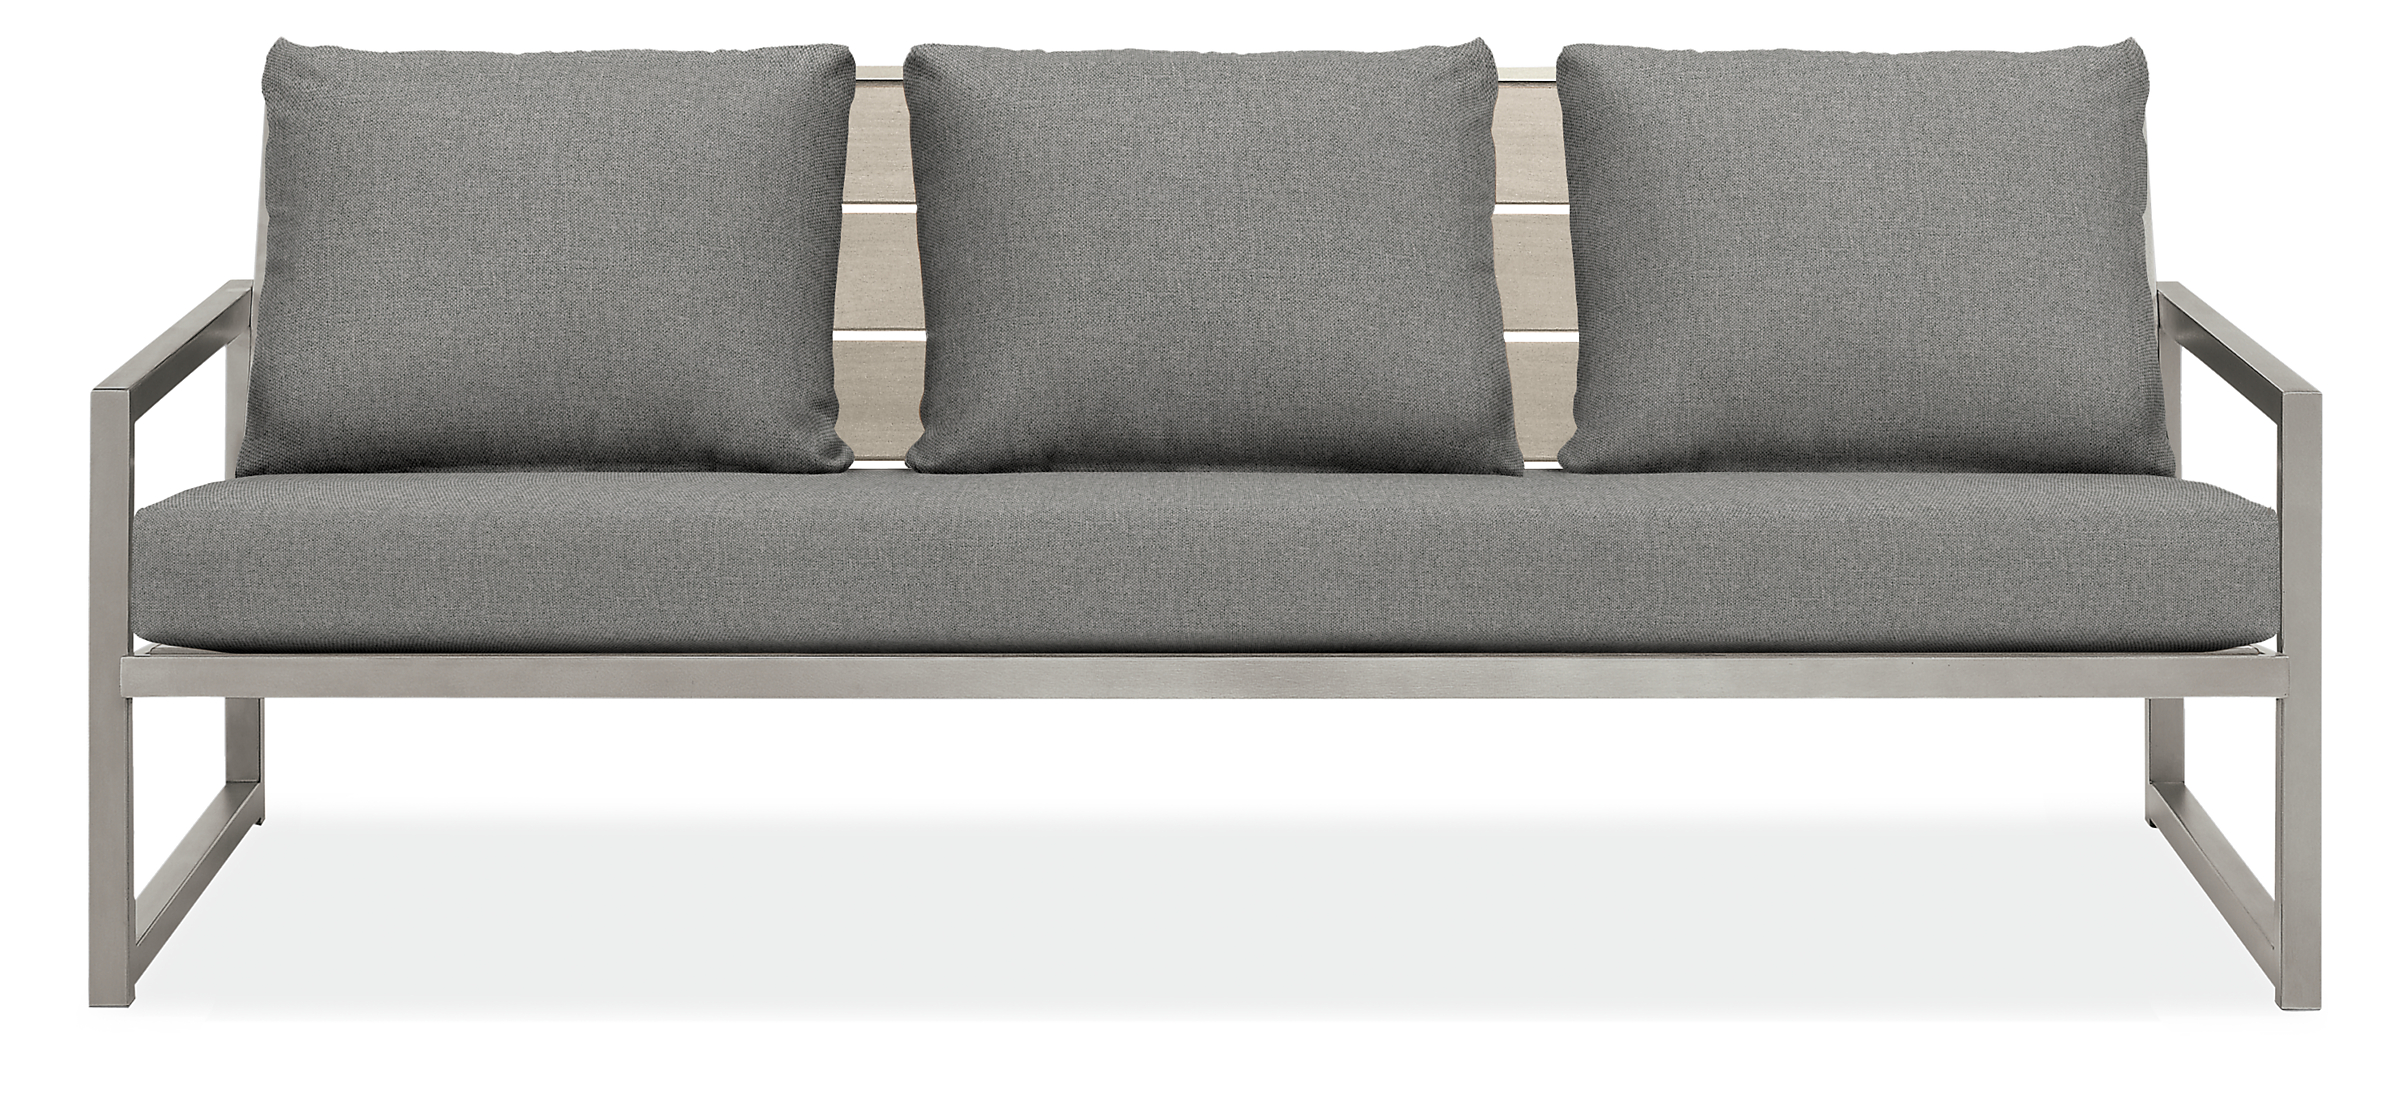 Montego Sofa Cushions